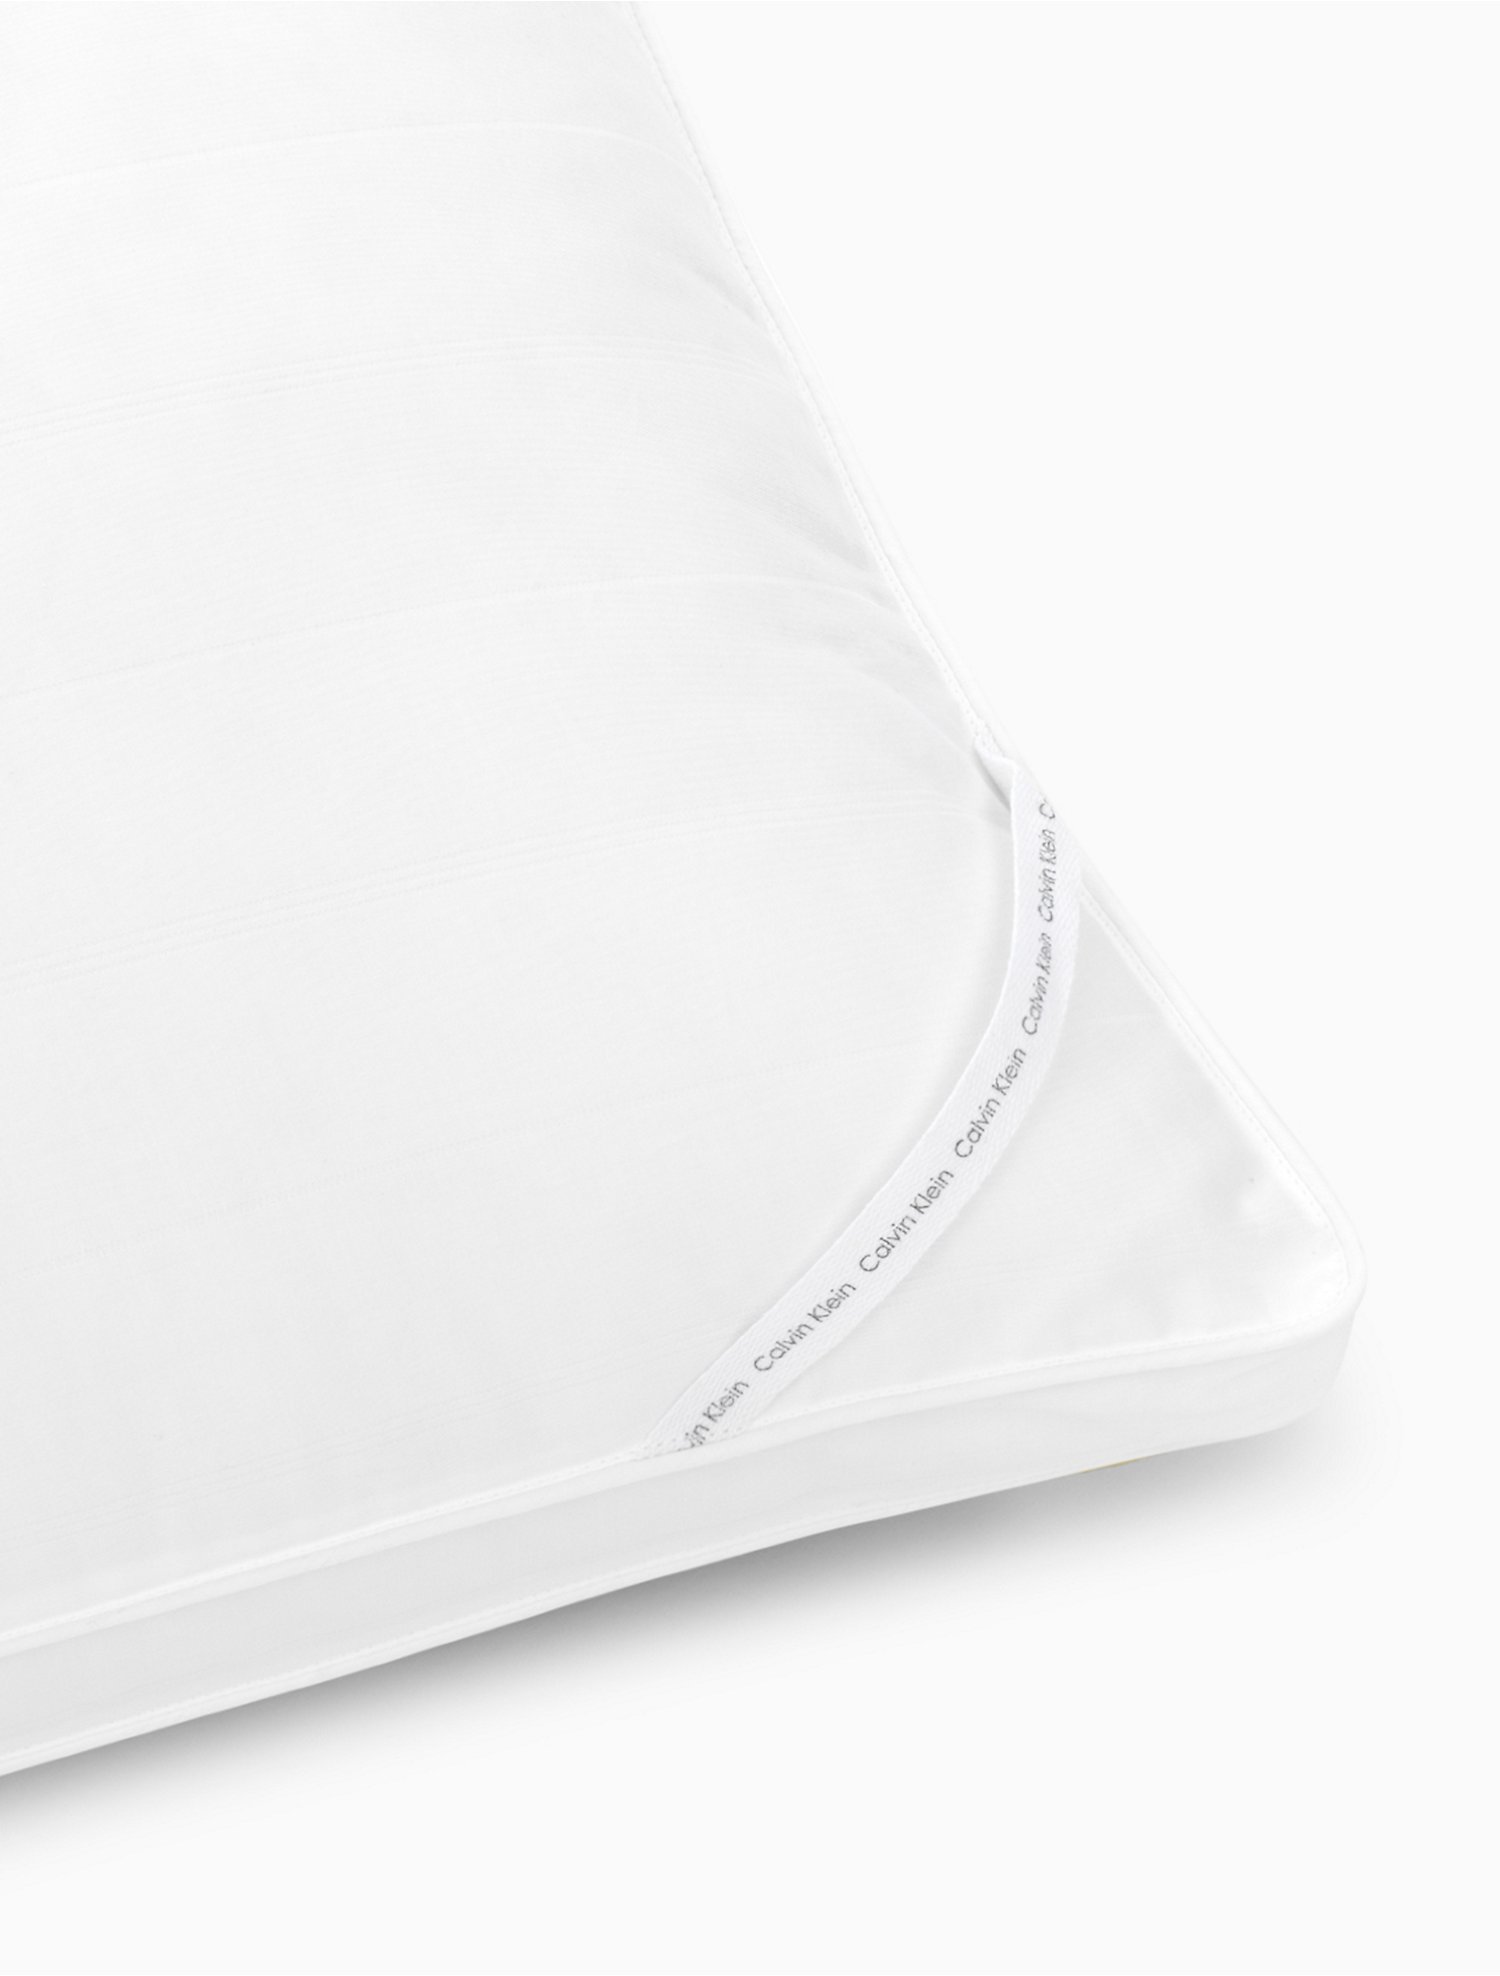 Almost Down Gusset Pillow | Calvin Klein